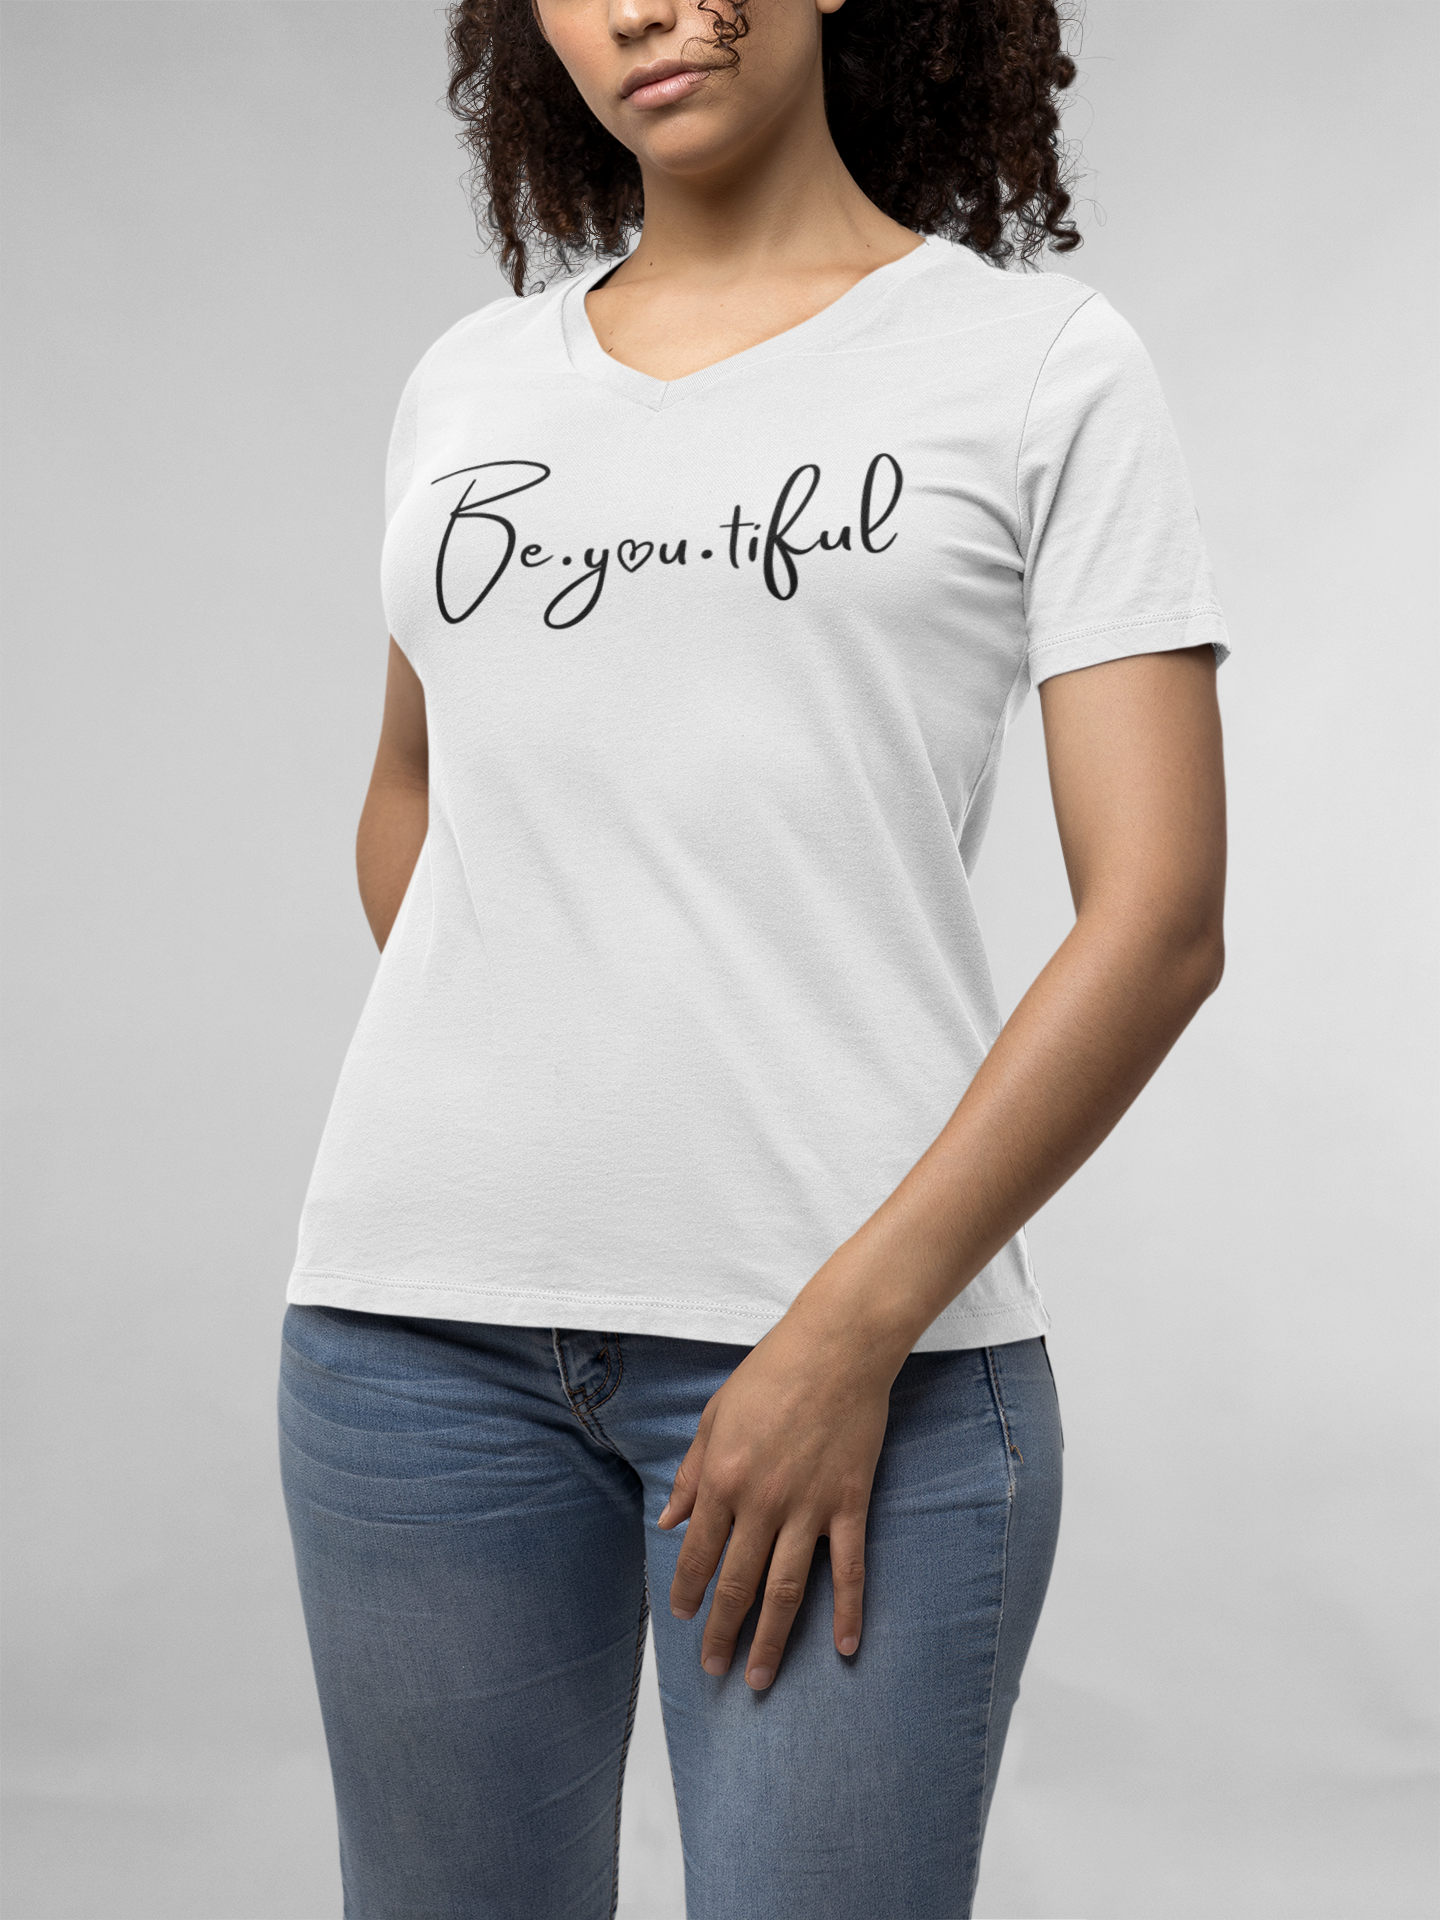 Beyoutiful V-Neck T-Shirt - White - black lettering